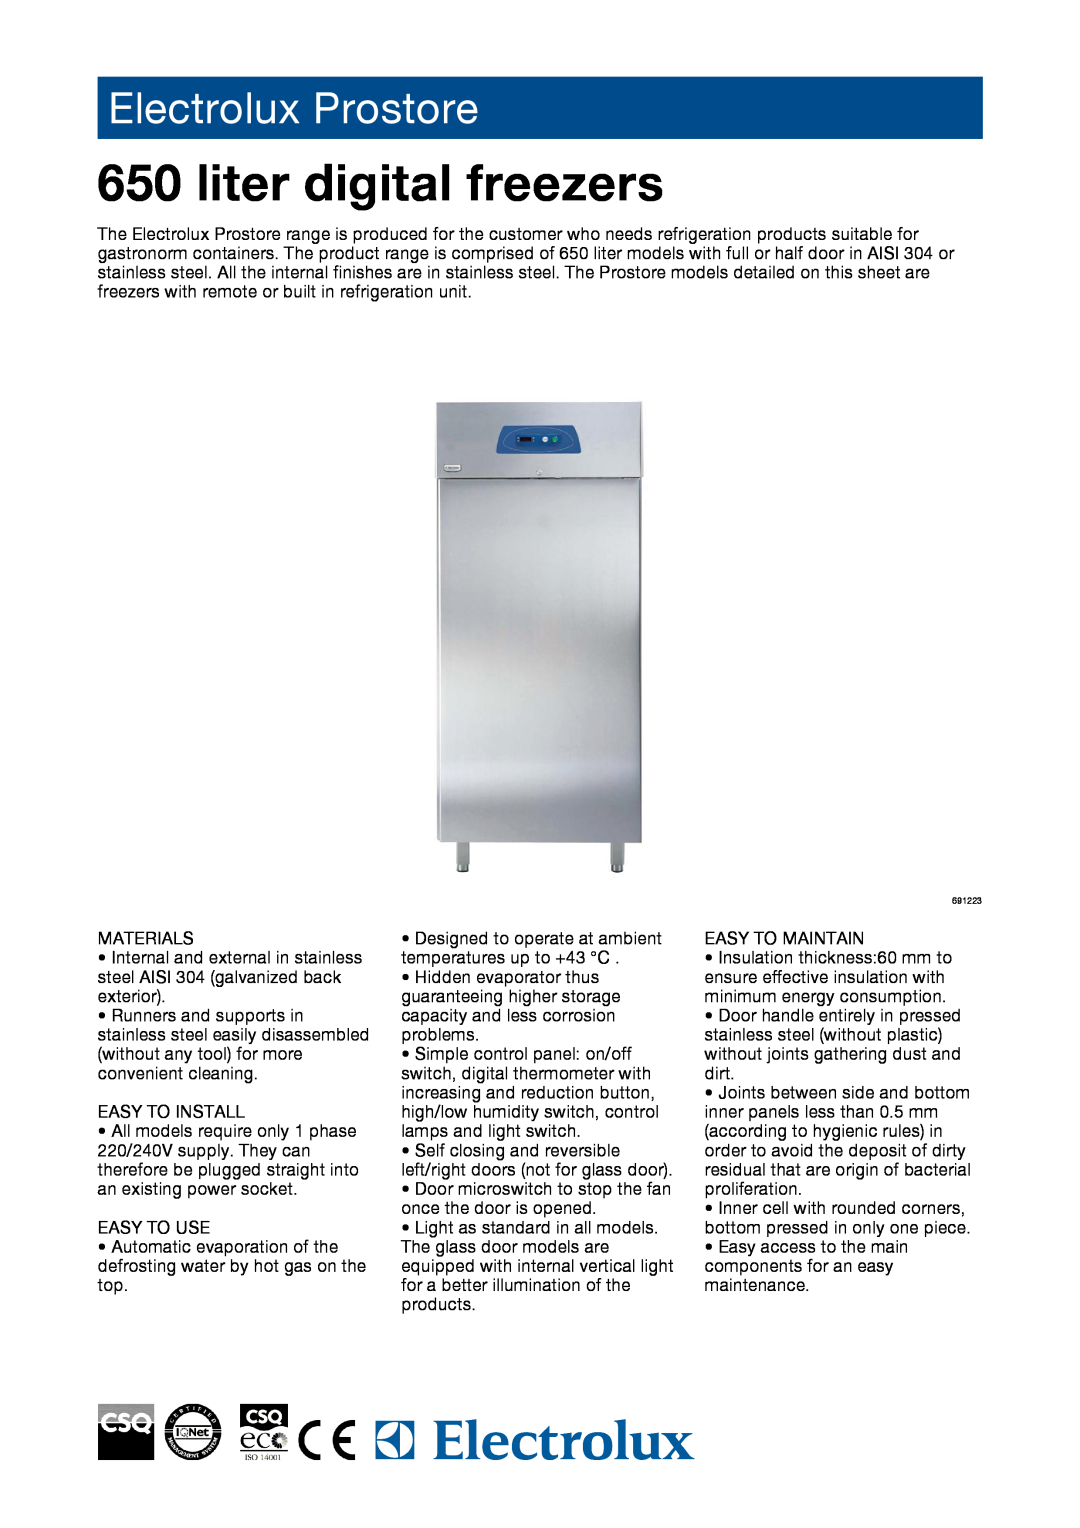 Electrolux PR06F1FR, PR06F2F, 691225, 691223, 691224 manual liter digital freezers, Electrolux Prostore 